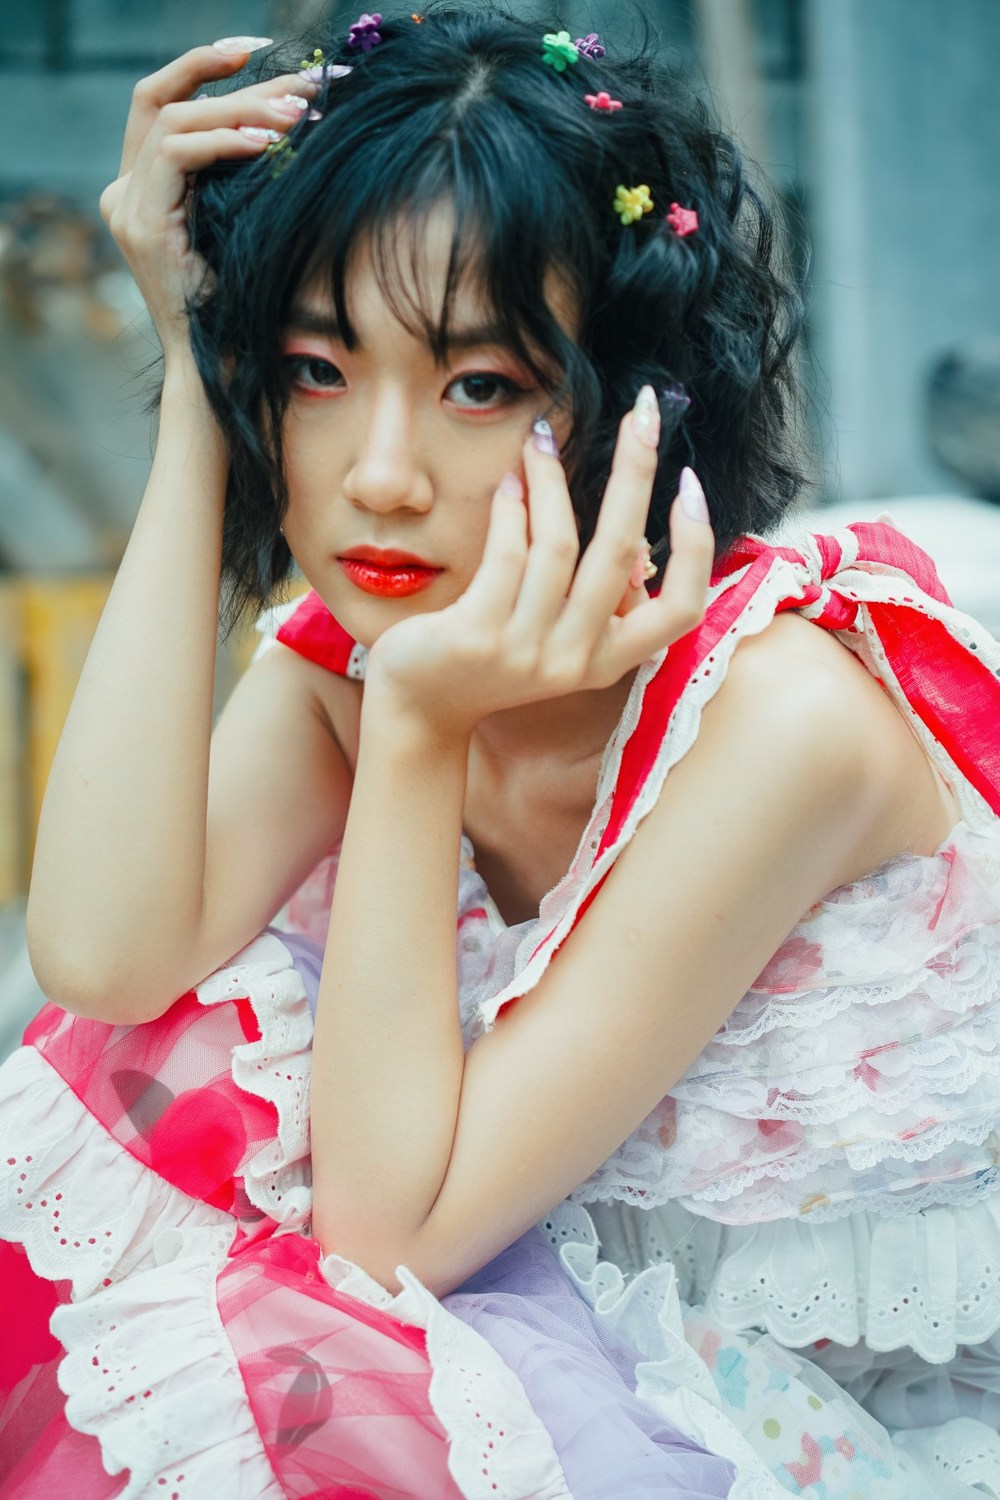  
Trang Yue ra mắt MV debut.